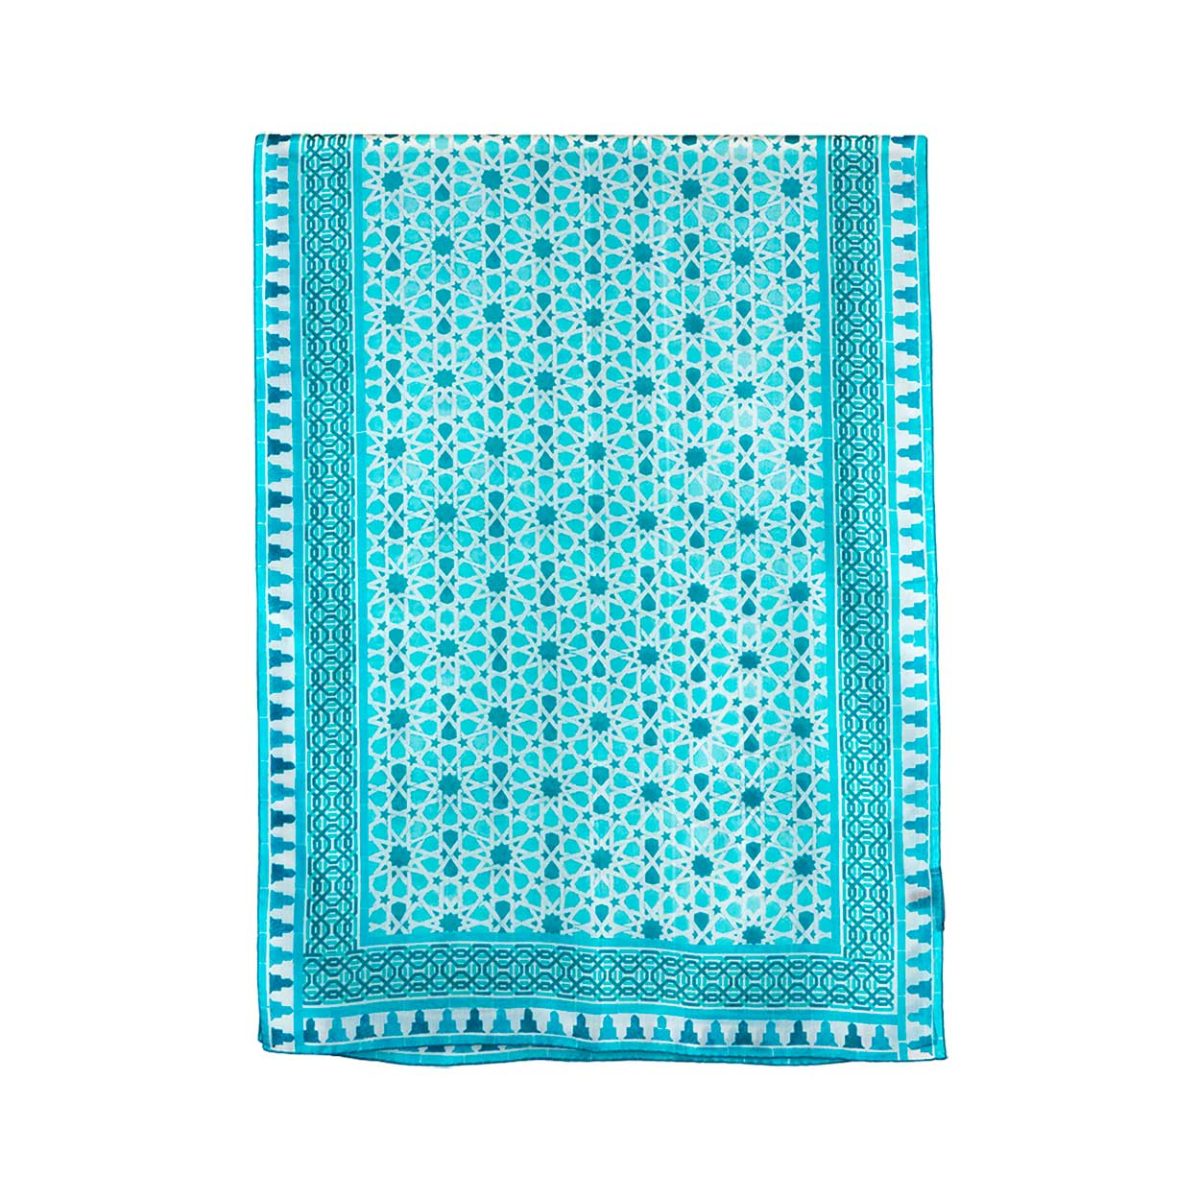 Blue large silk scarf for women with moorish tiles print